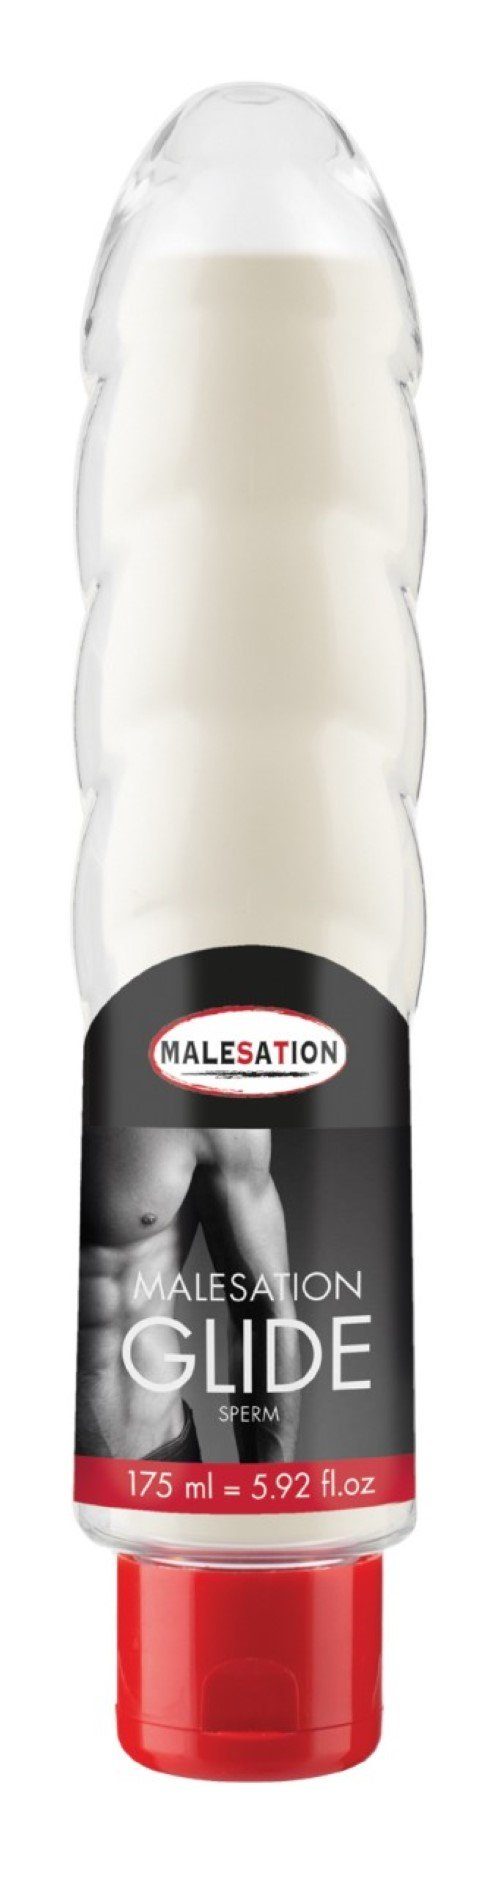 Malesation Gleitgel 175 ml - MALESATION Glide Sperm 175 ml